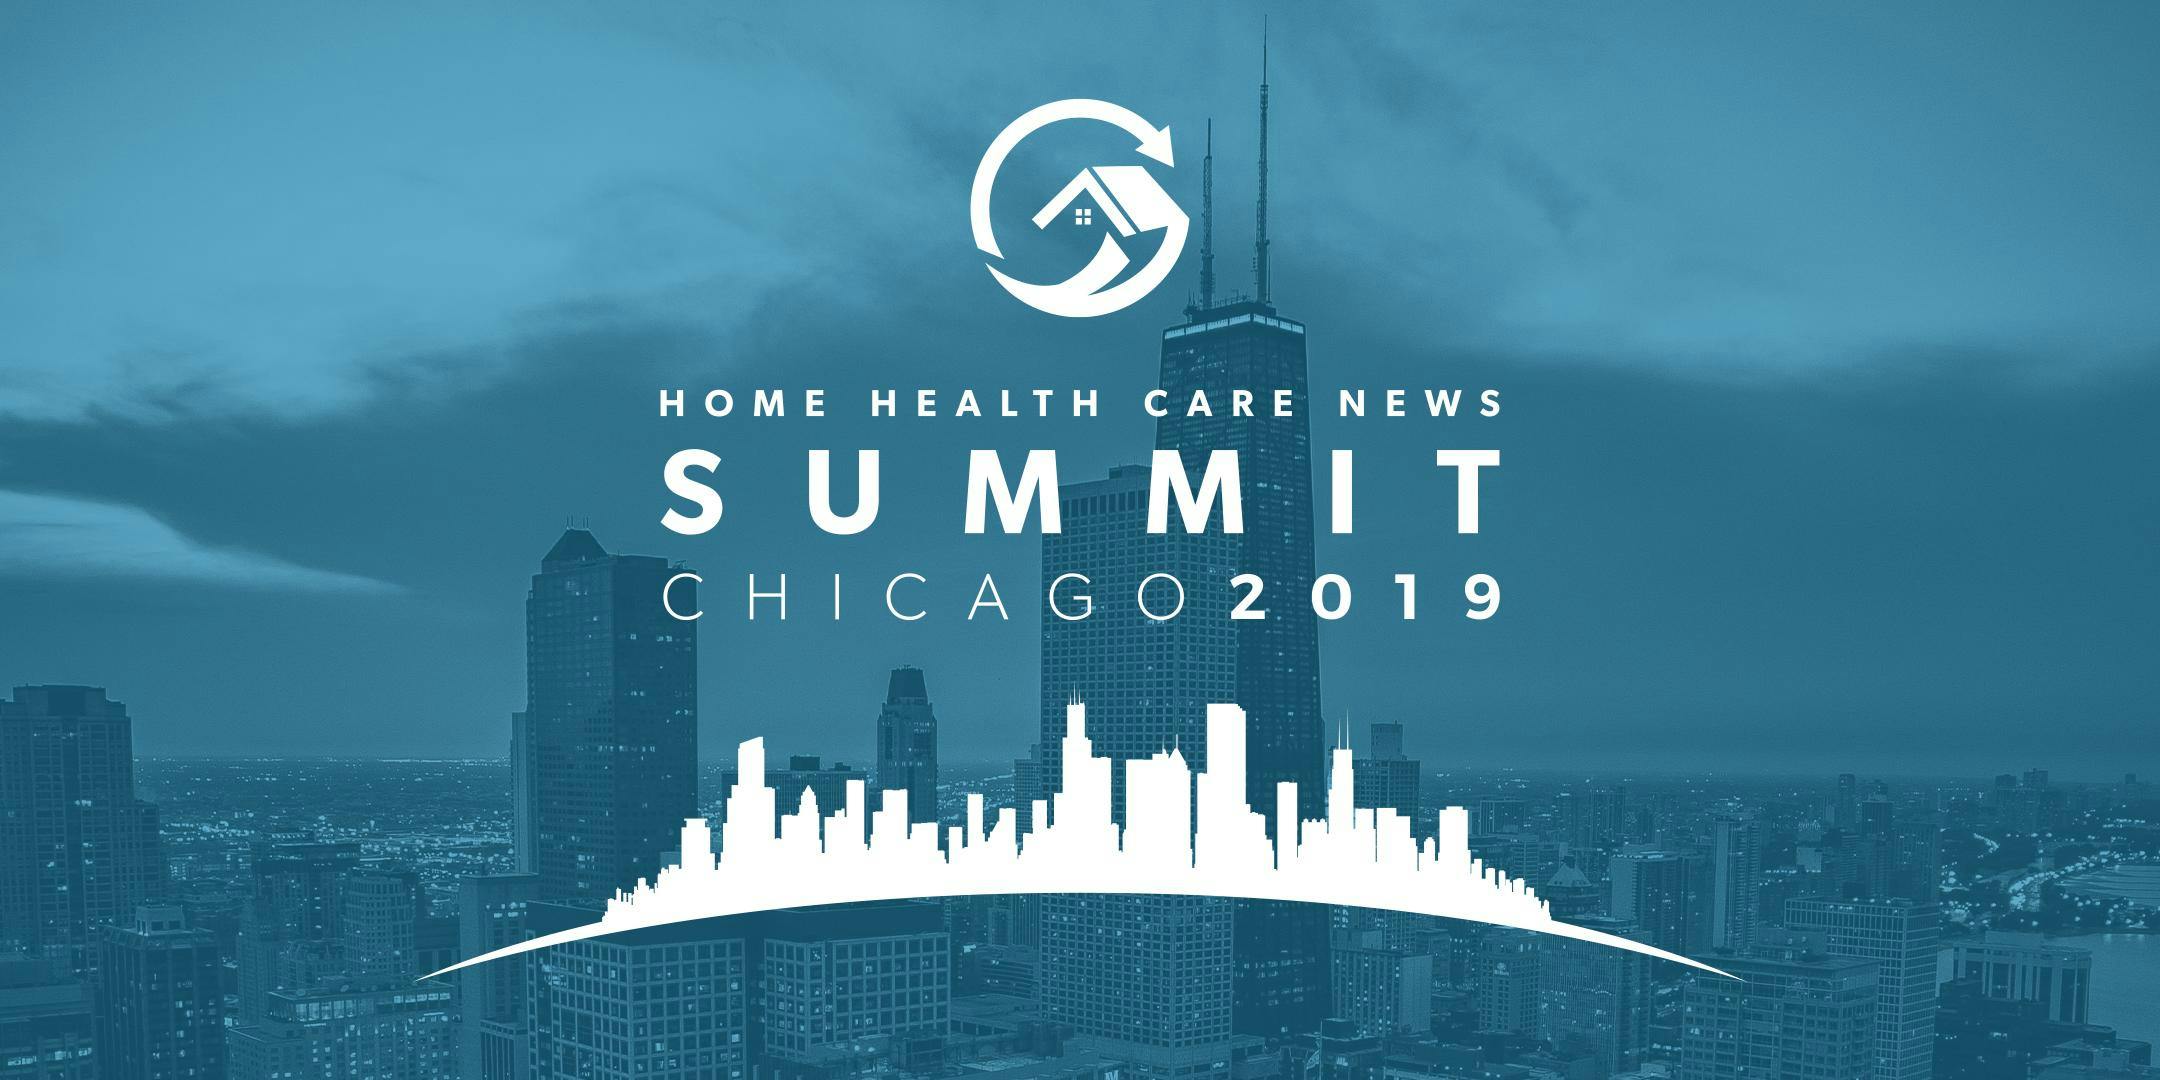 Home Health Care News Summit 2019